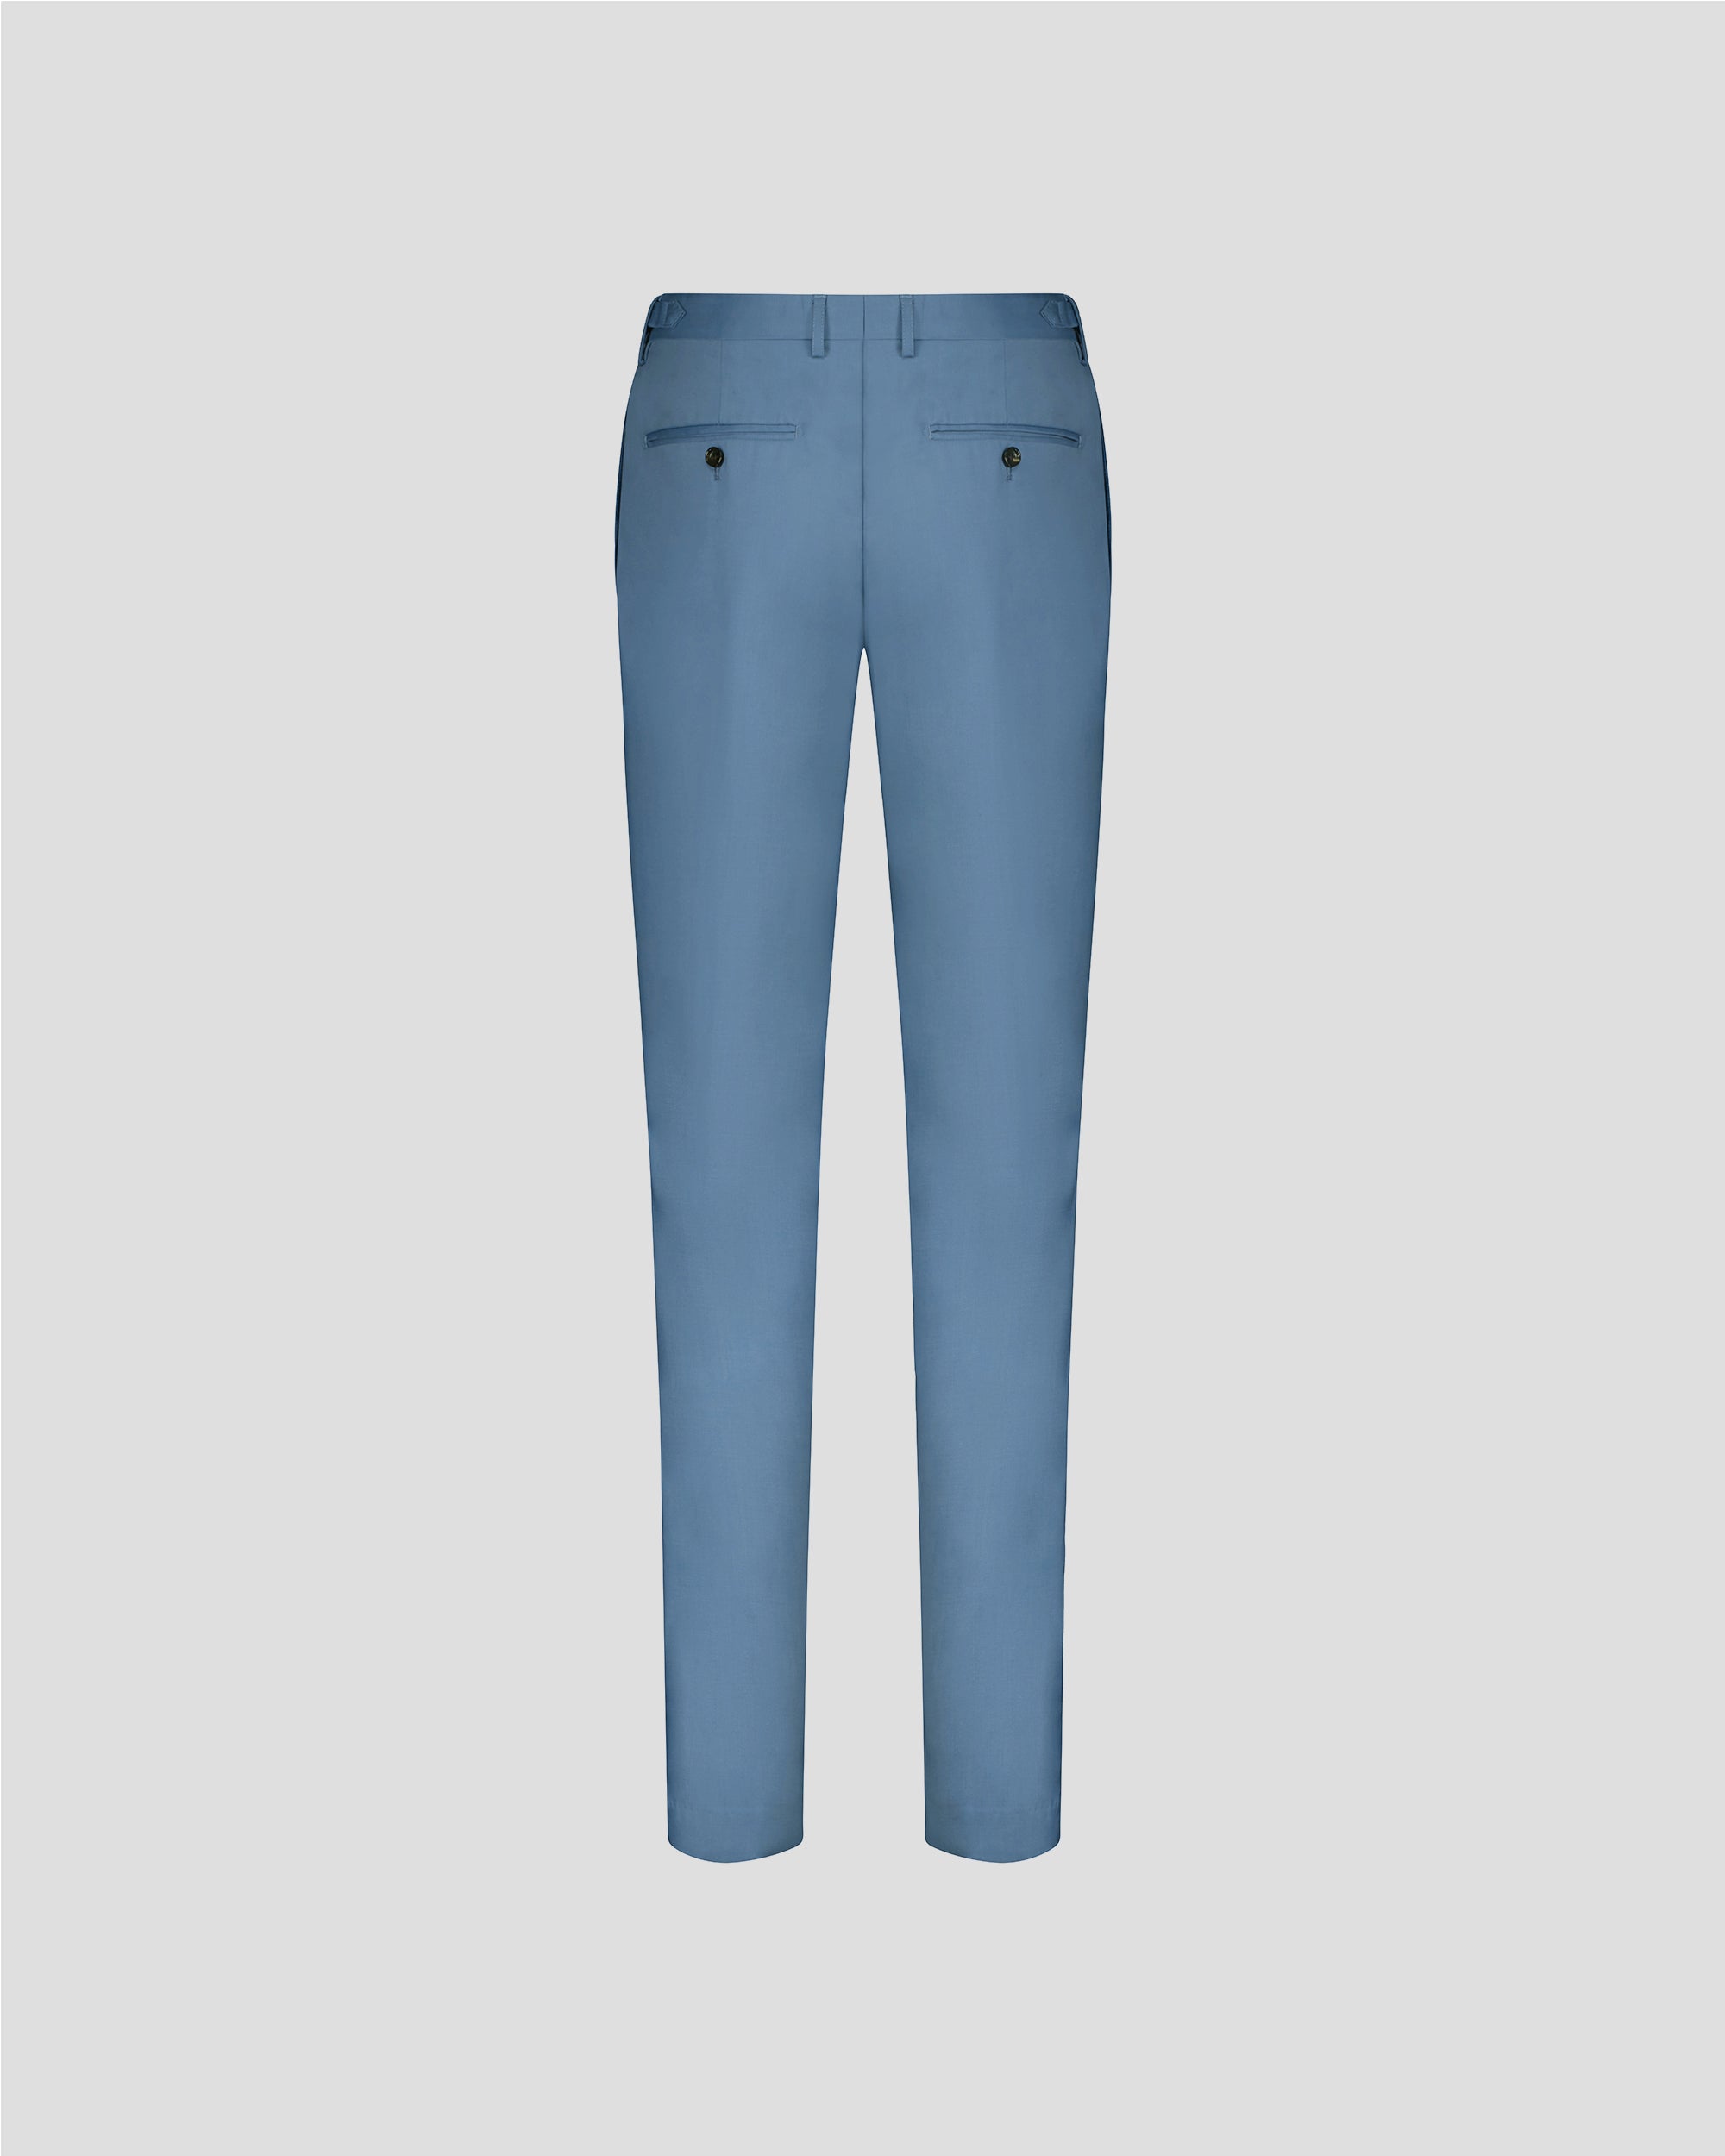 KIJBLAE Women's Bottoms Fashion Full Length Trousers Comfy Lounge Casual  Pants Jeans Denim Pants For Girls Solid Color Light Blue L - Walmart.com